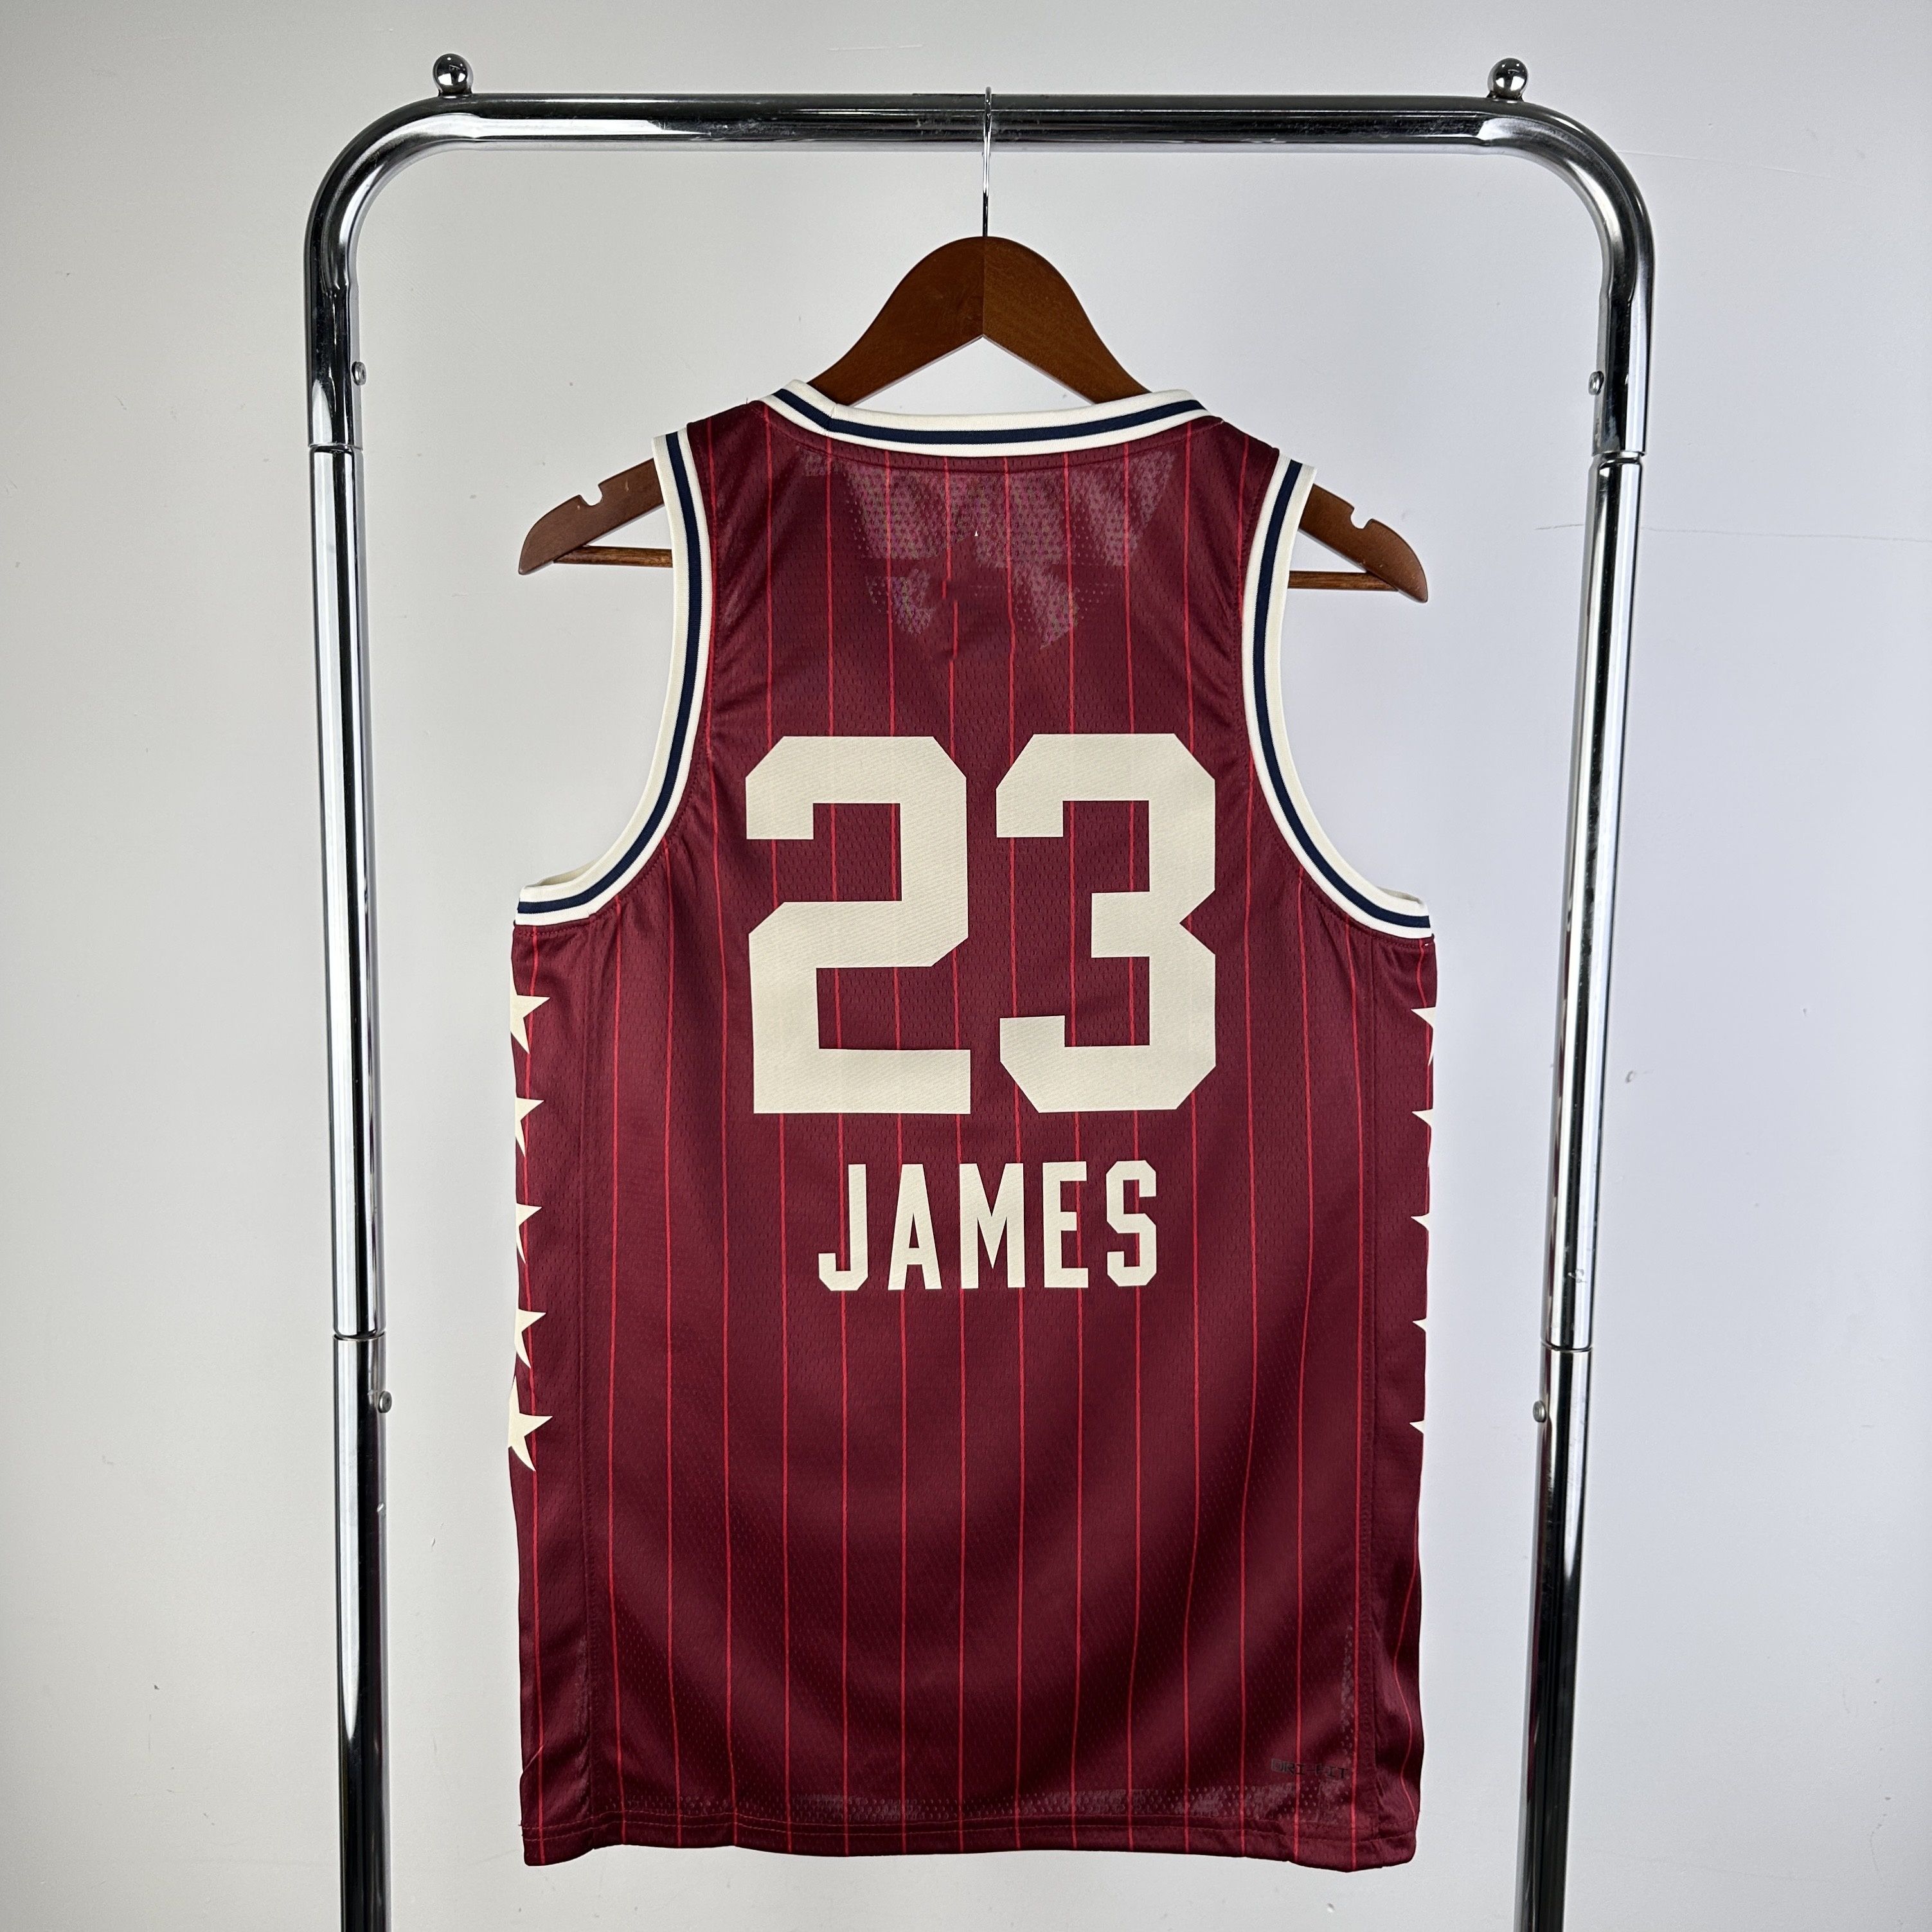 # 23 James